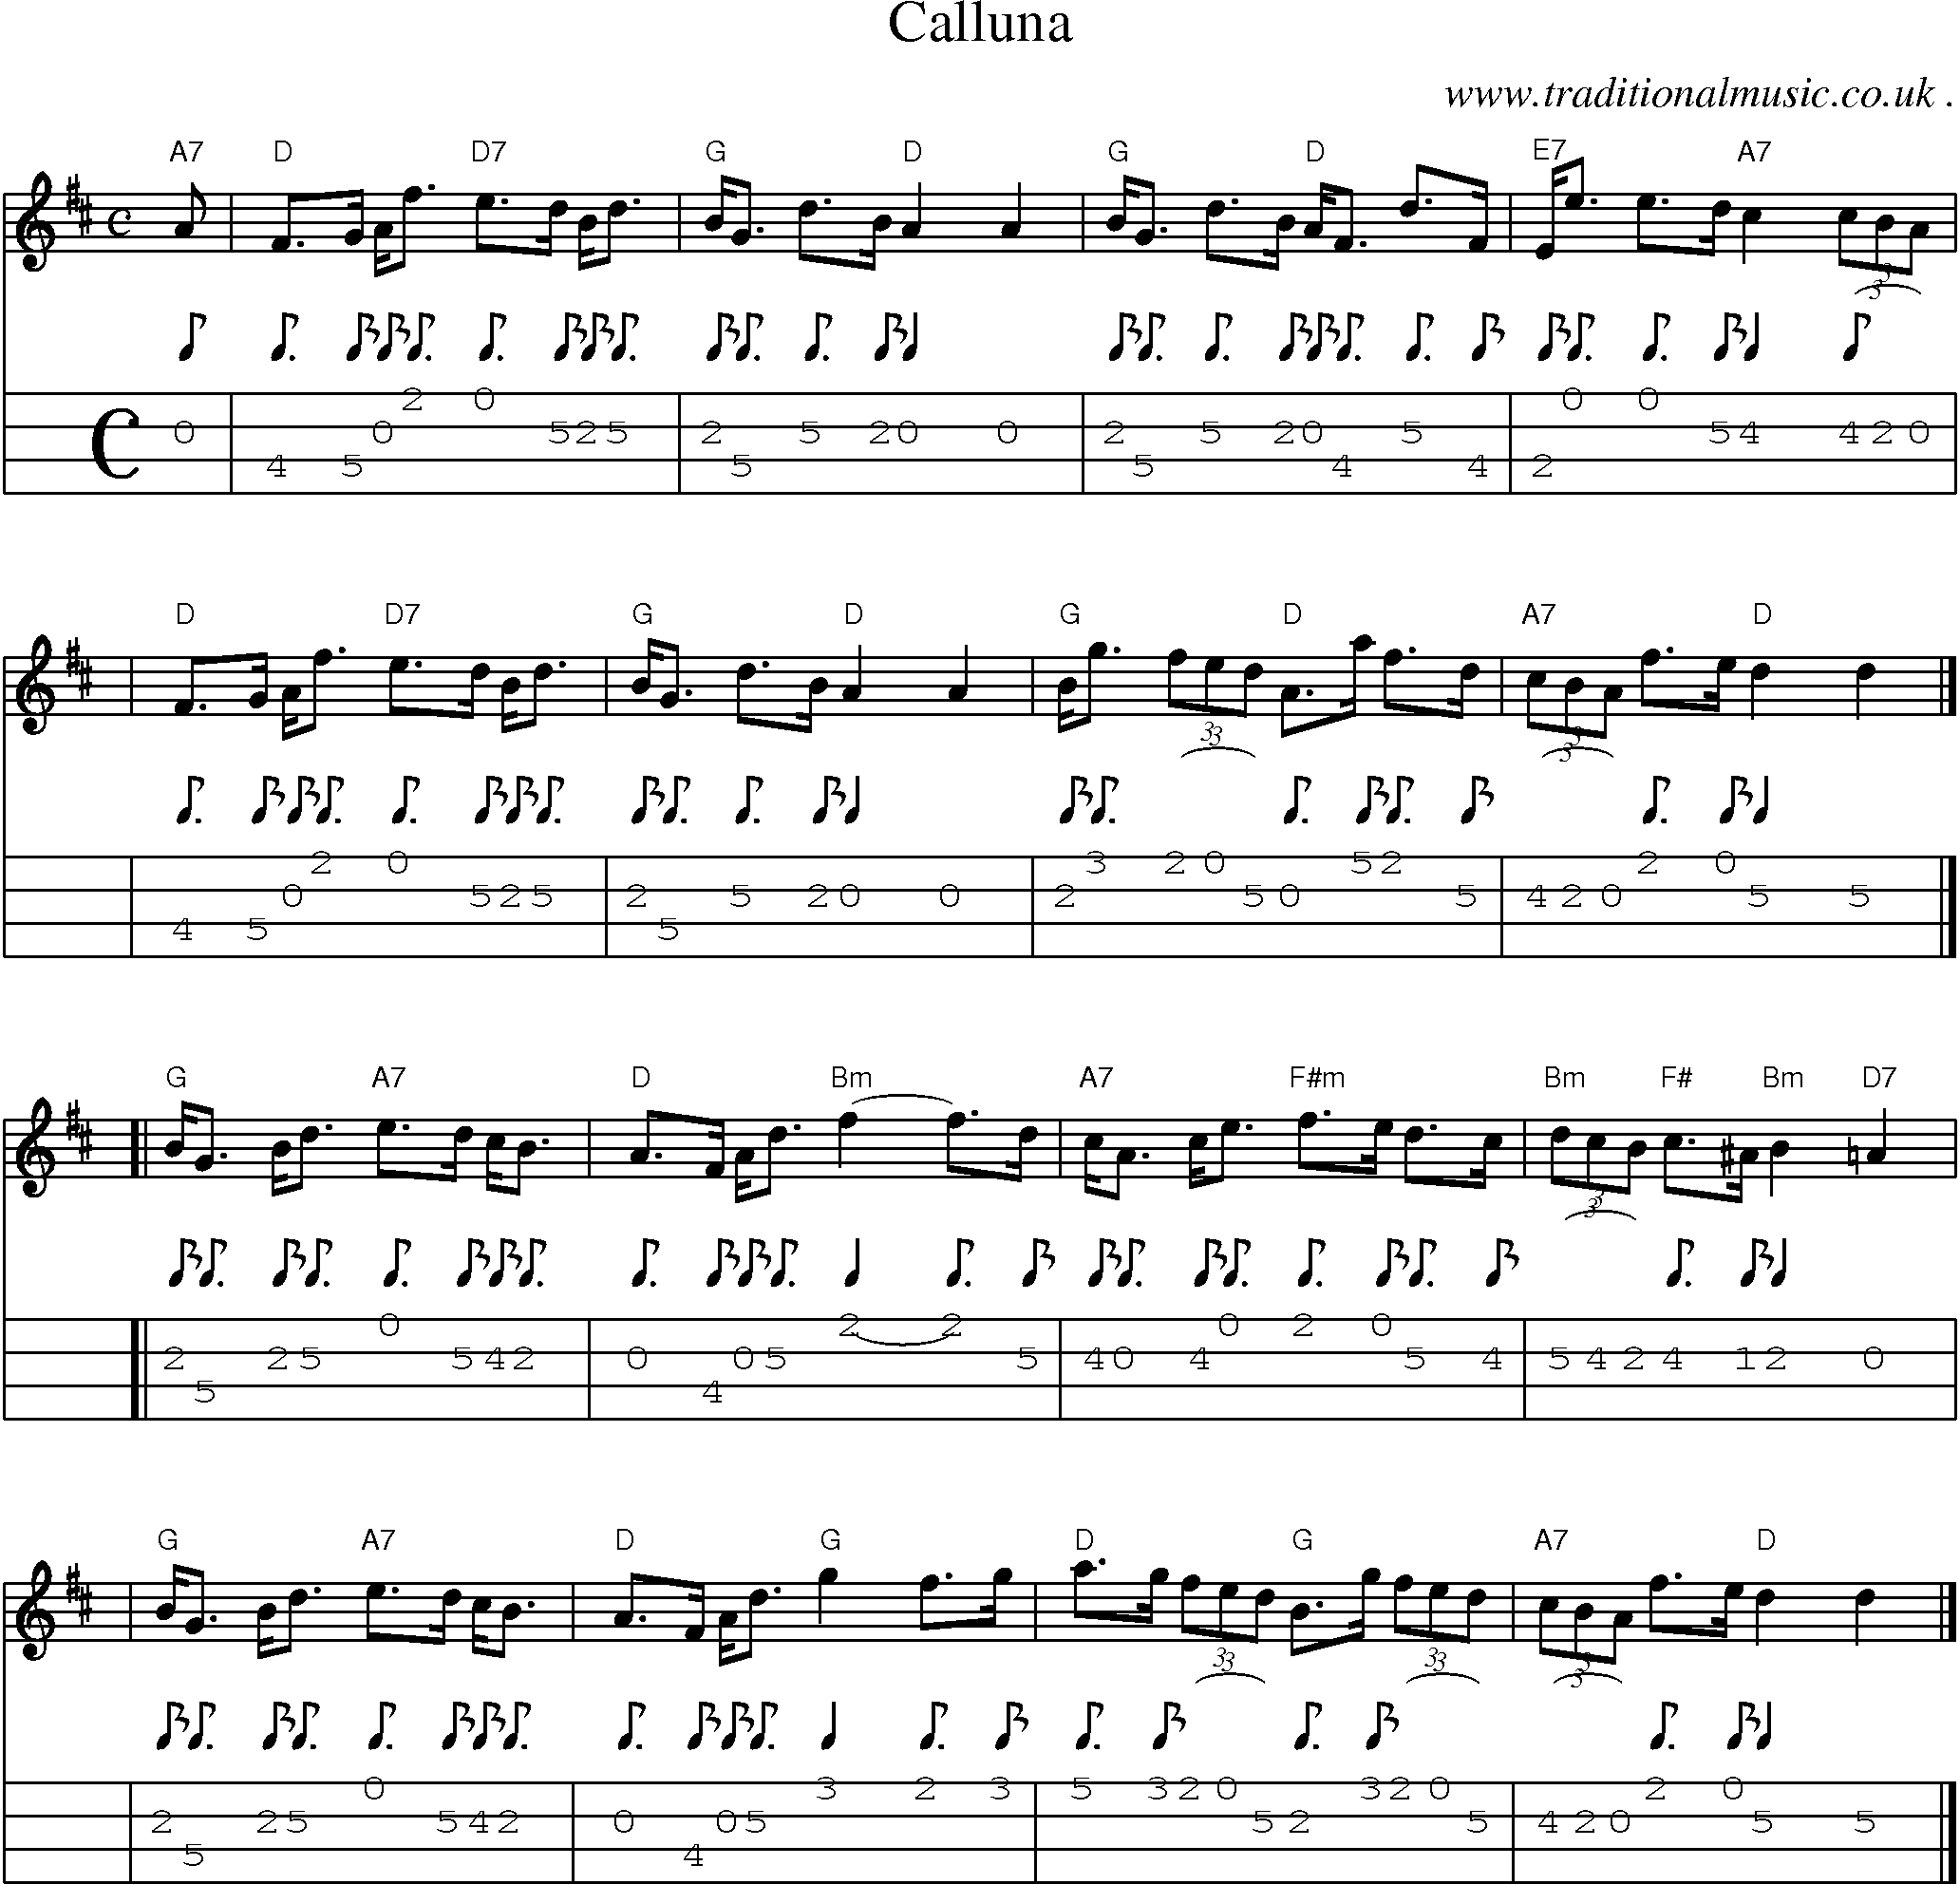 Sheet-music  score, Chords and Mandolin Tabs for Calluna